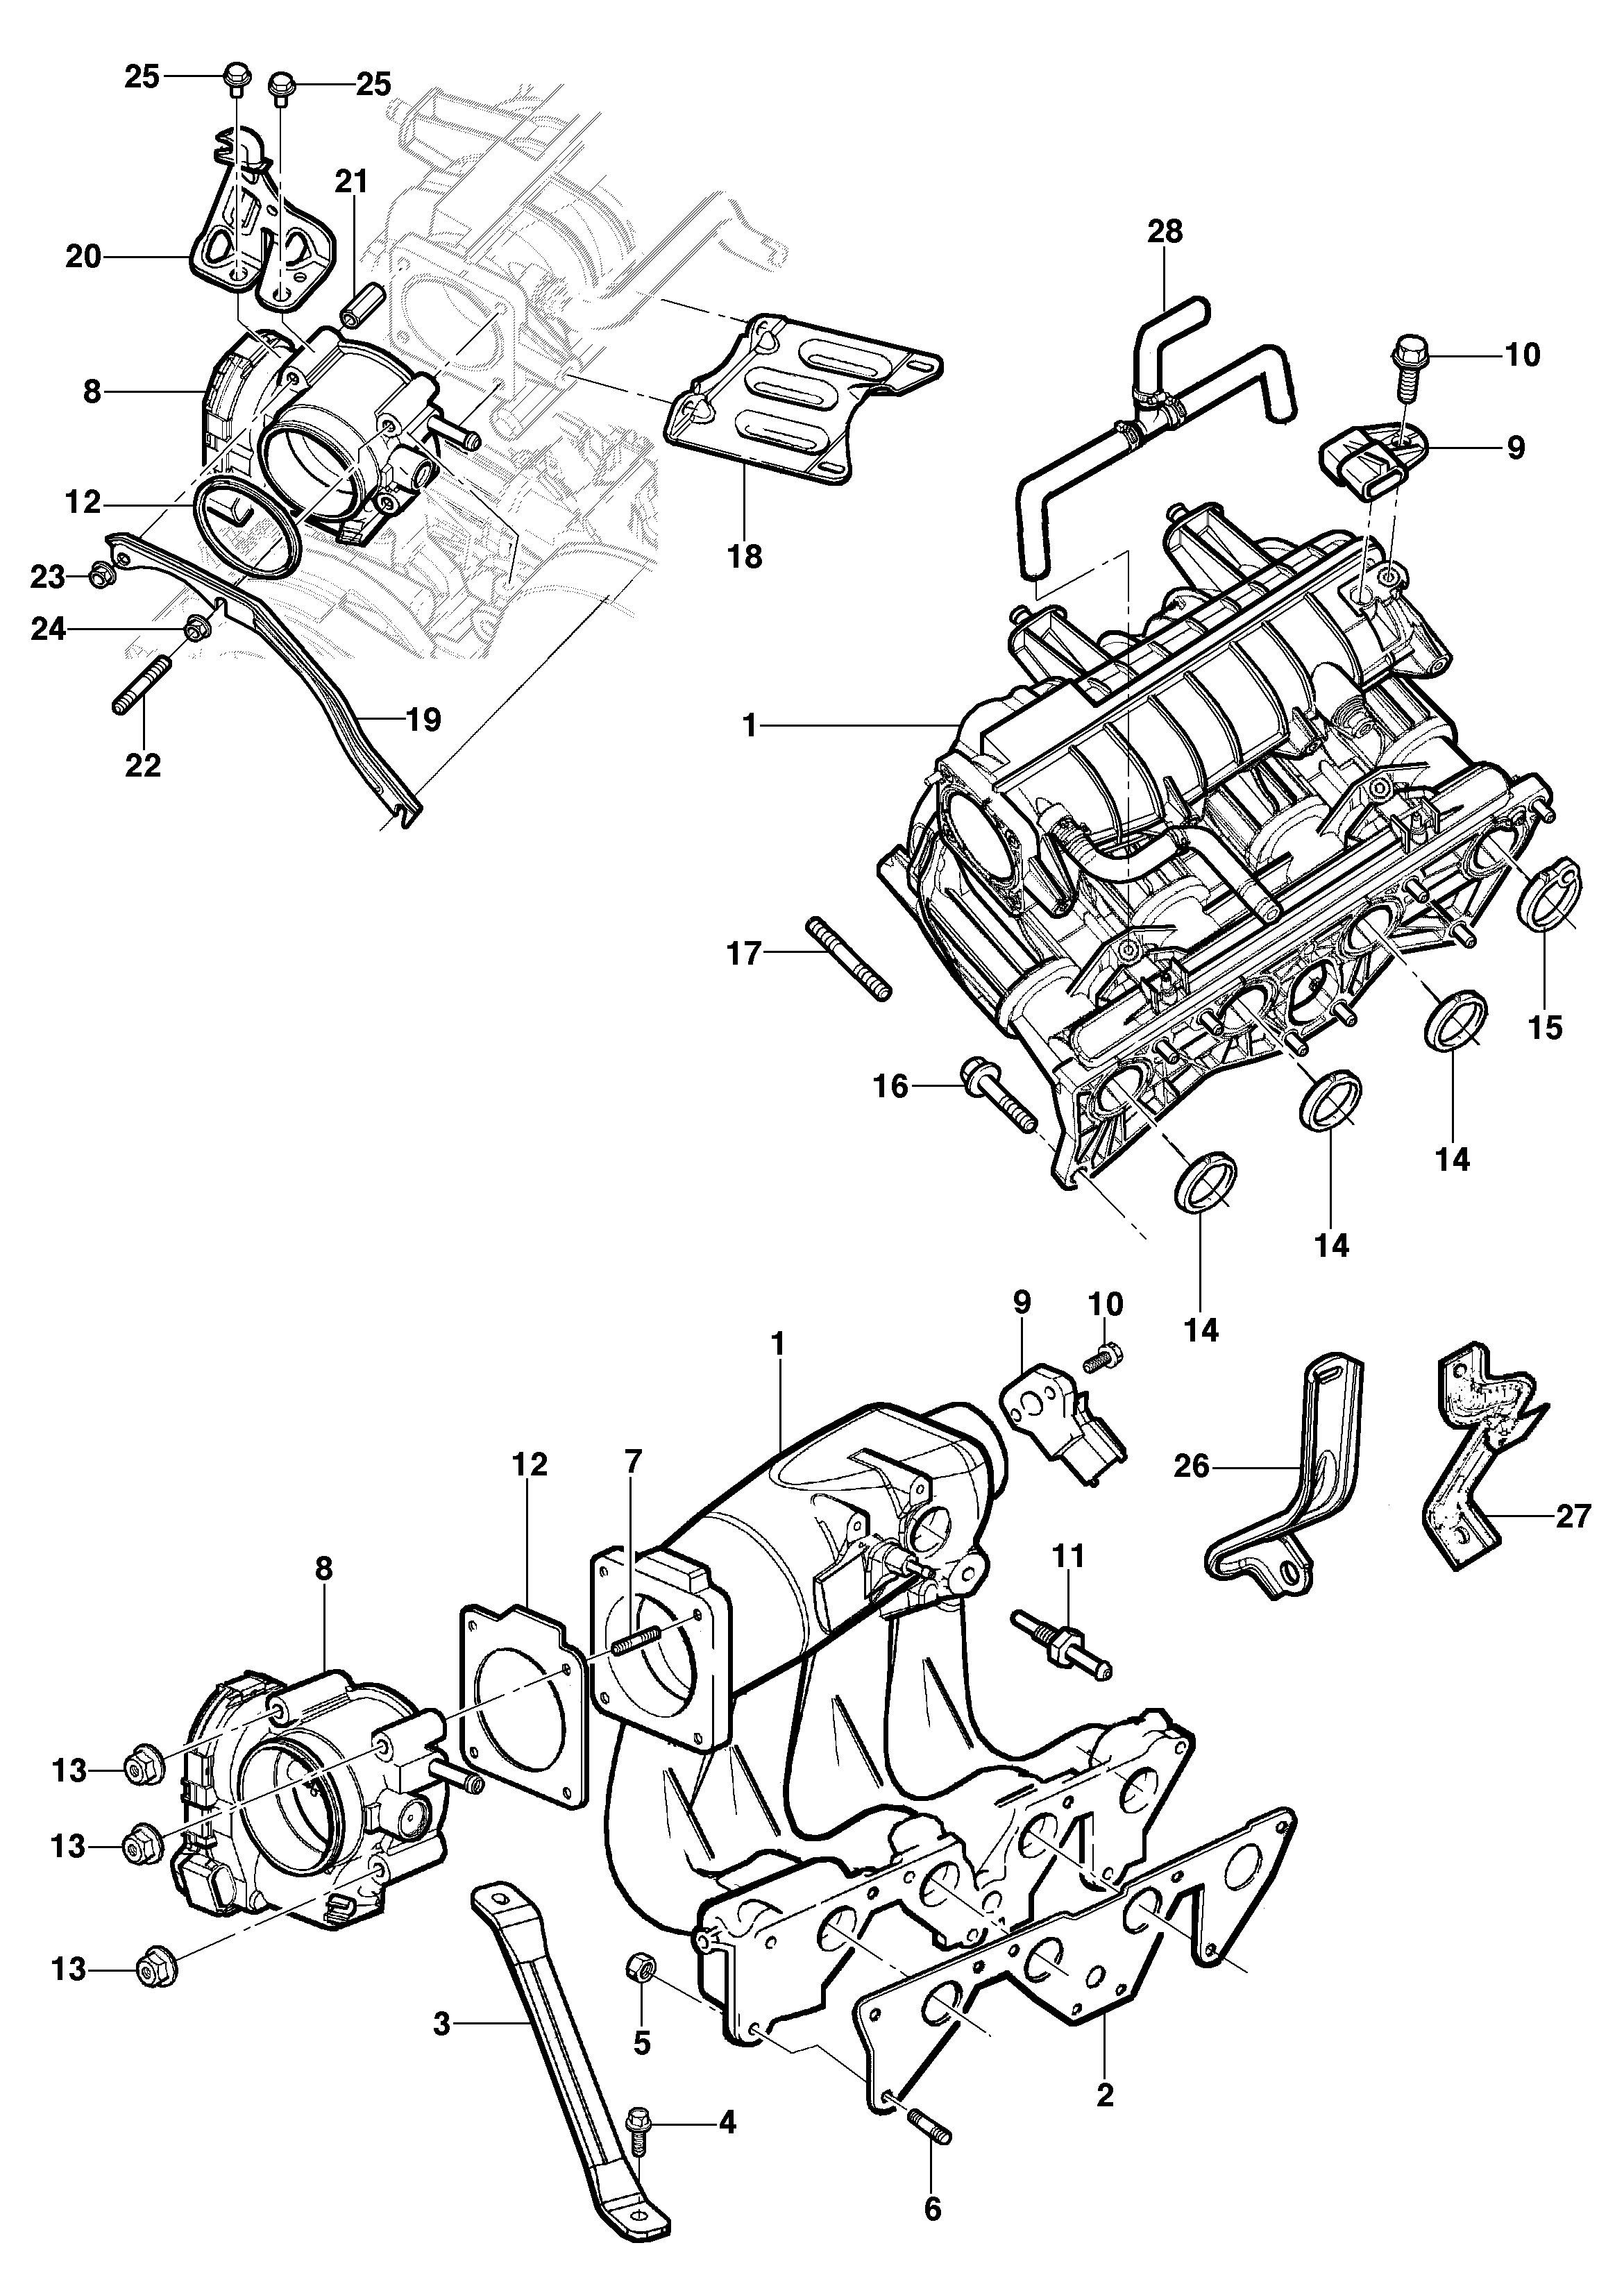 Multiple de admisión - motor 8V